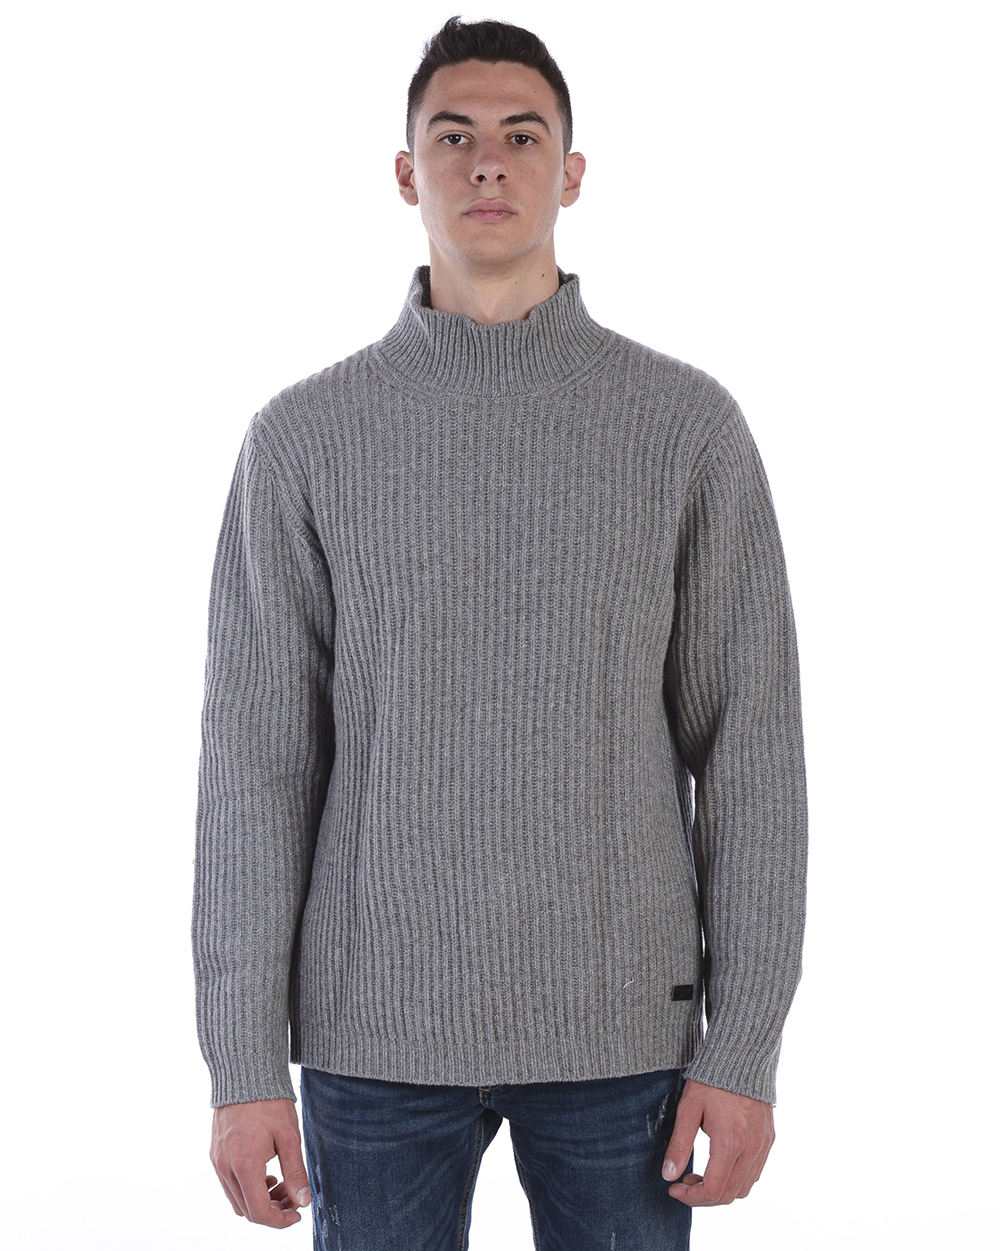 Trussardi Jeans Sweater REGULAR Man Gr 52M00155 0F000185 E020 Sz. XXL MAKE OFFER